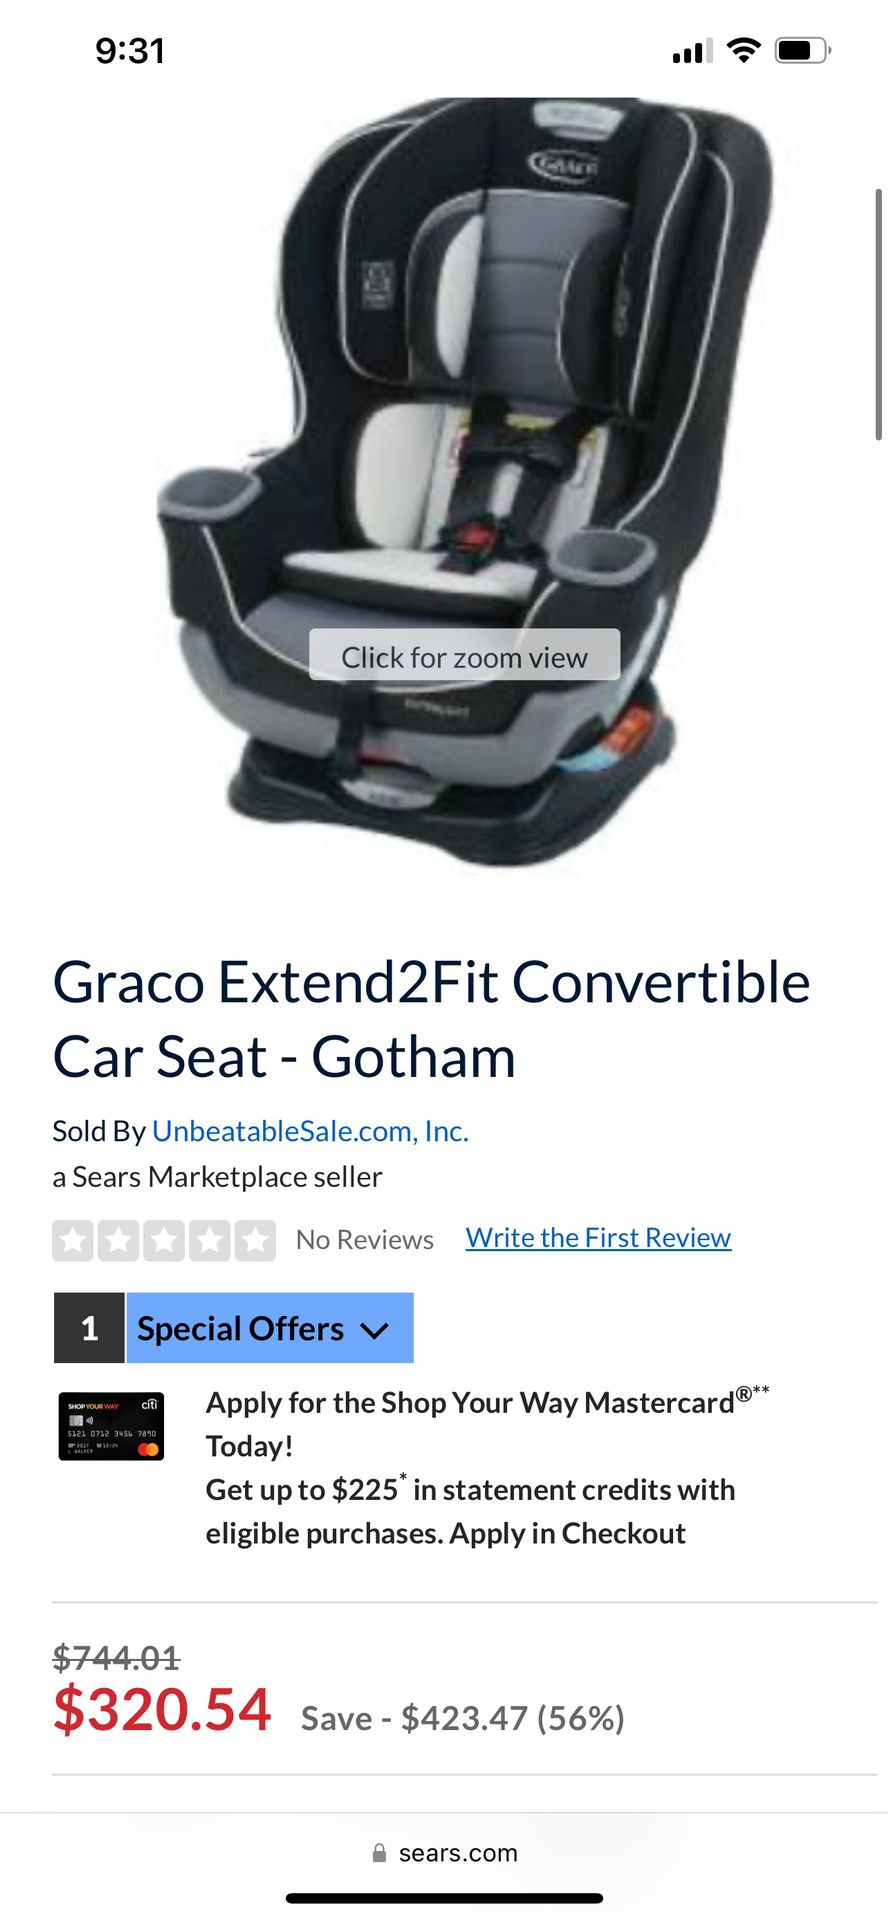 Graco Extend2Fit Convertible Car Seat - Gotham